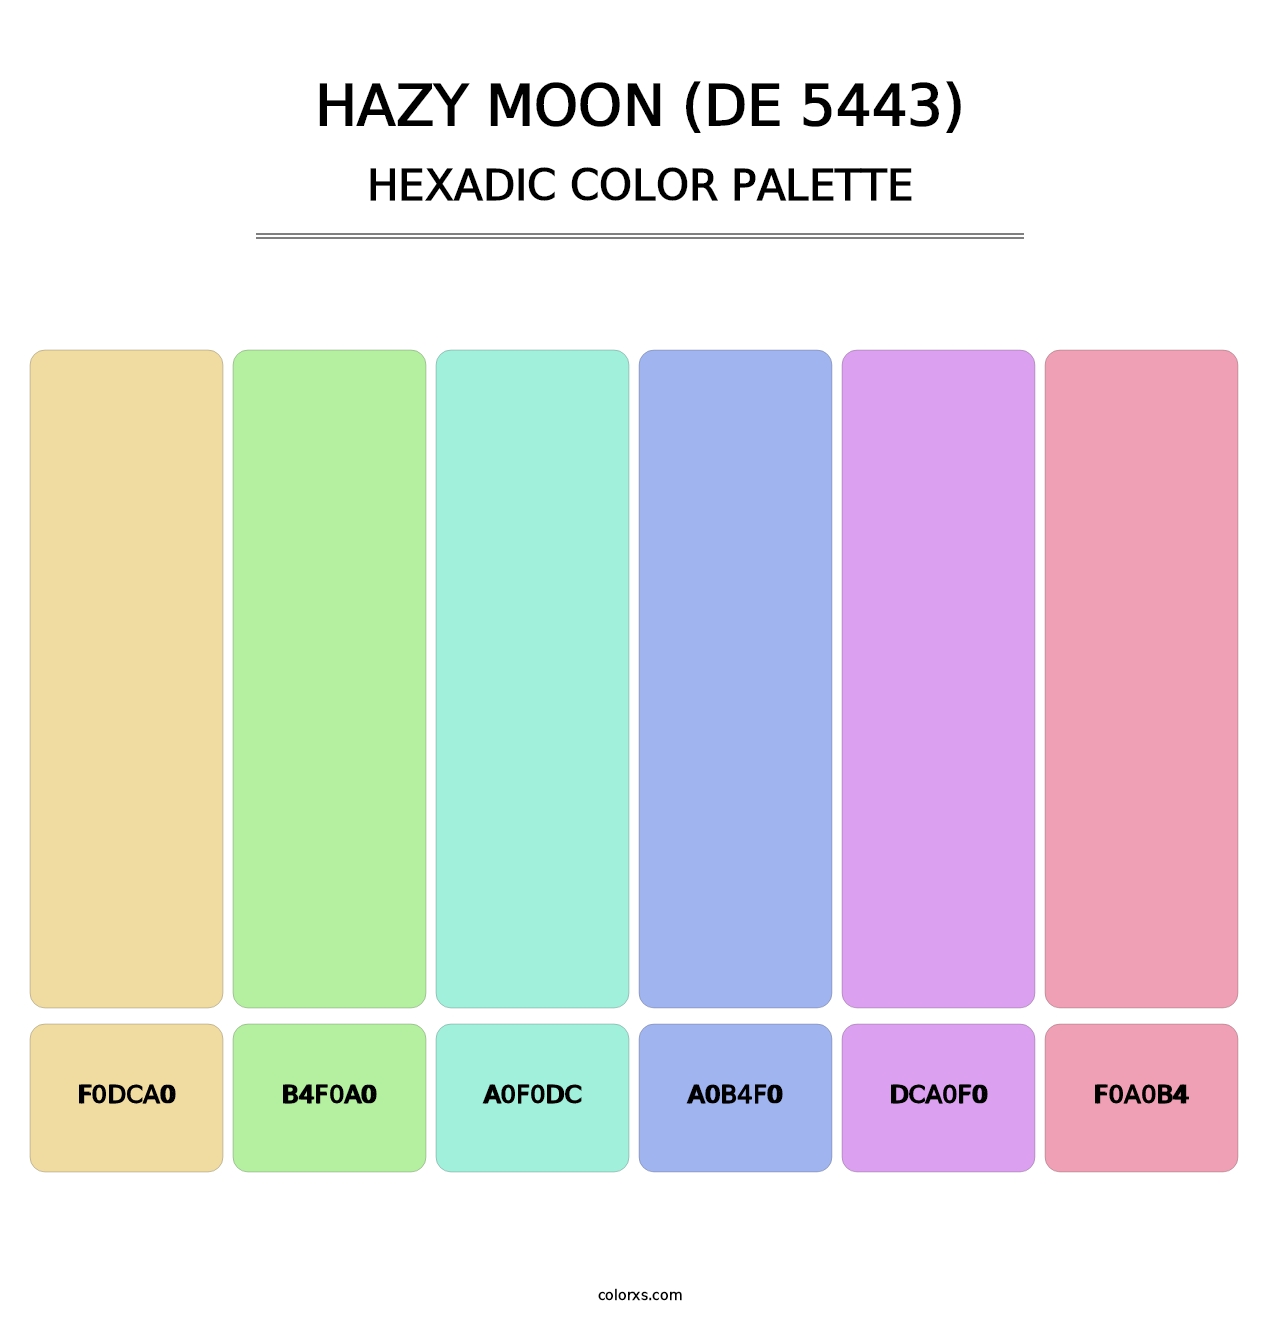 Hazy Moon (DE 5443) - Hexadic Color Palette